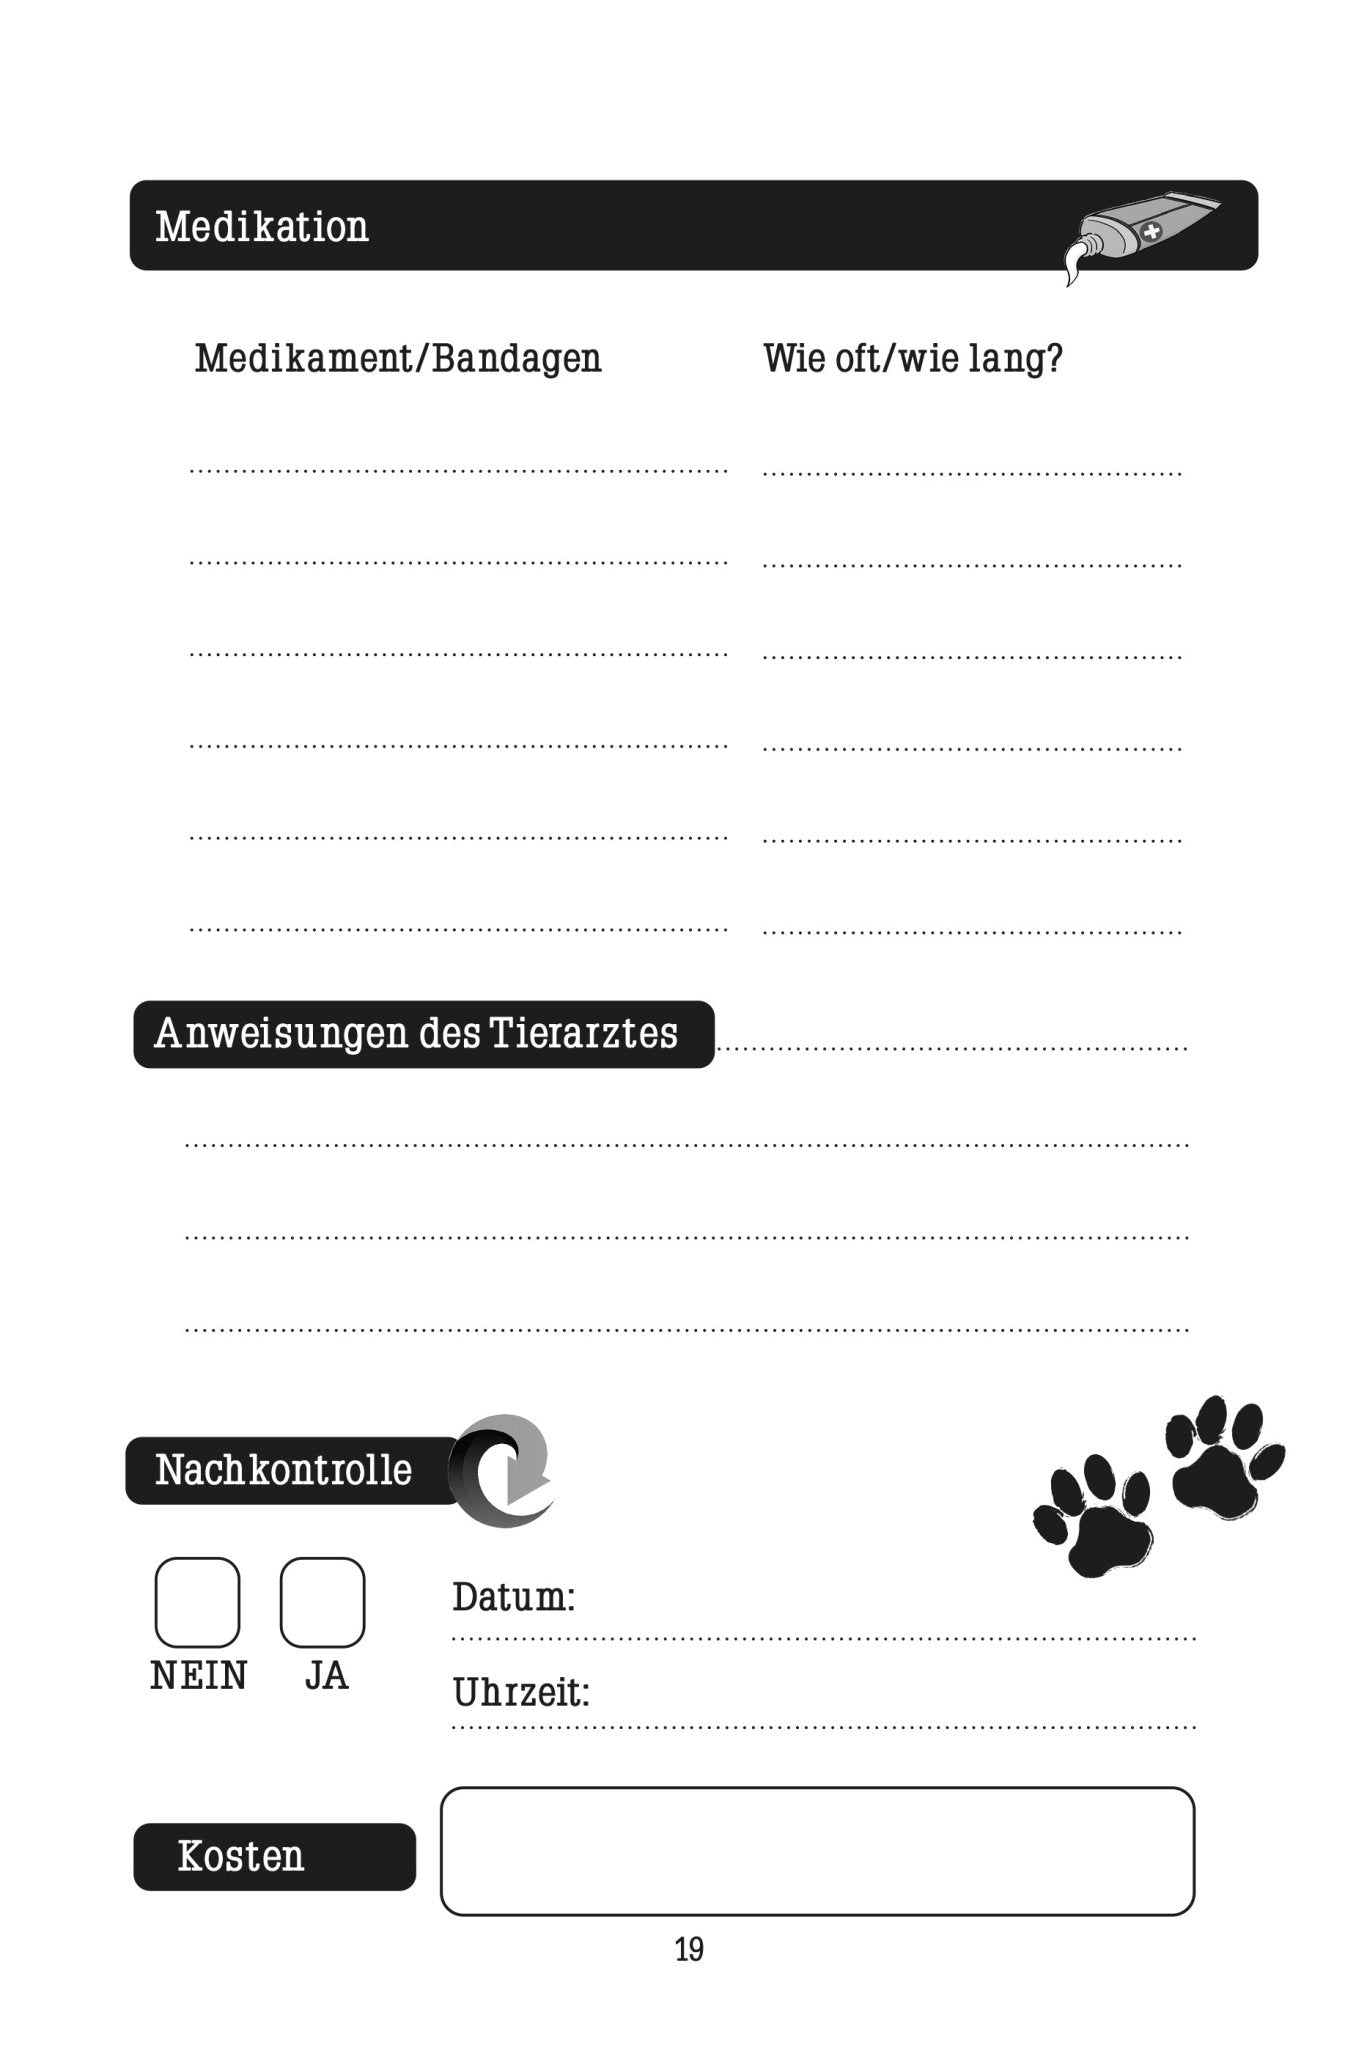 Hunde Gesundheits Logbuch (Buchdruck) - Monsoon Publishing